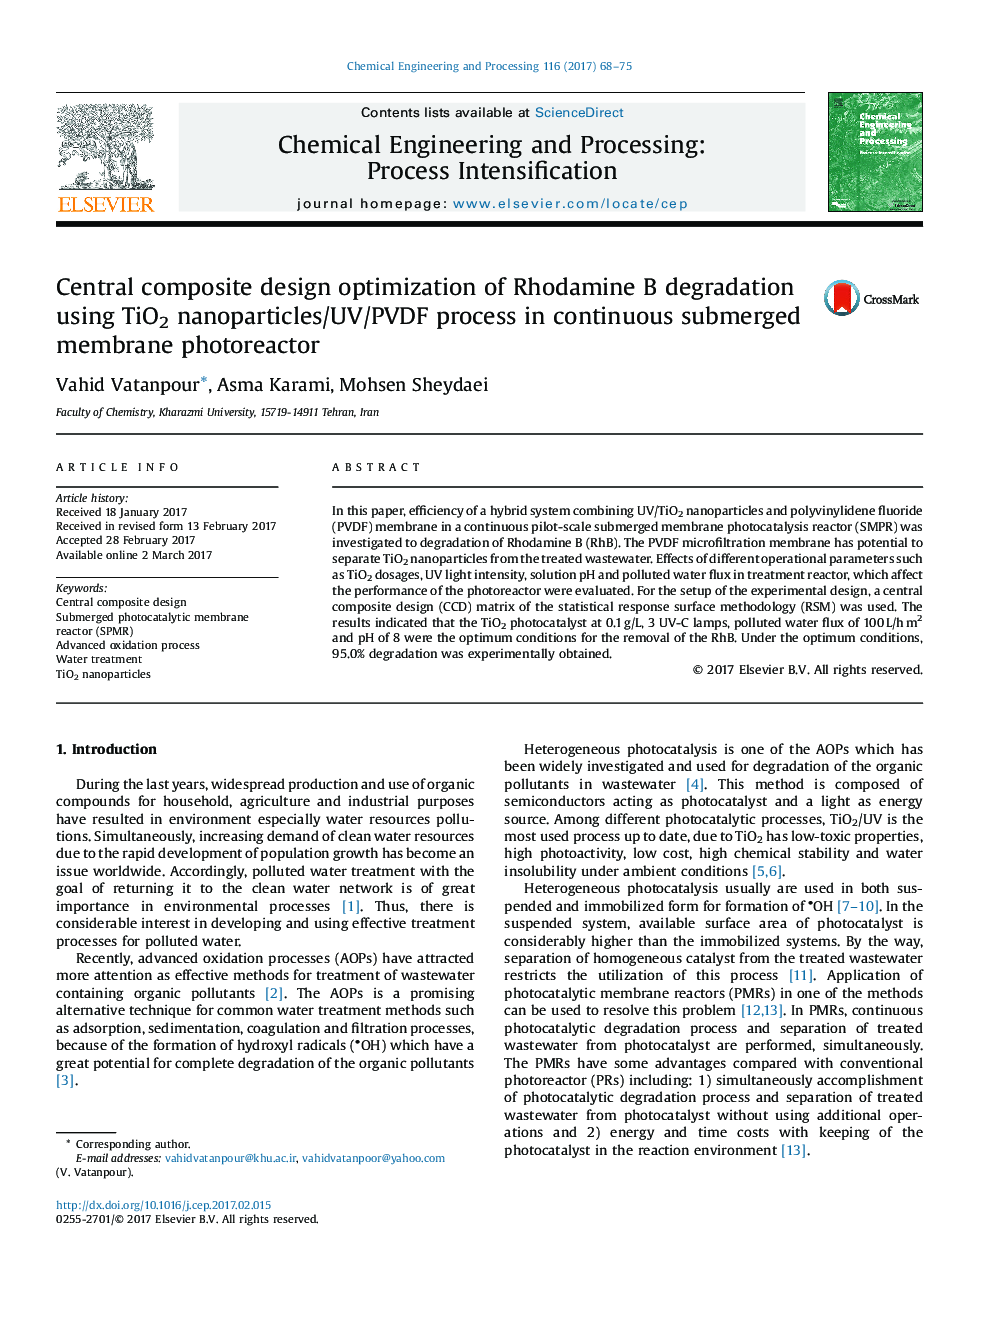 Central composite design optimization of Rhodamine B degradation using TiO2 nanoparticles/UV/PVDF process in continuous submerged membrane photoreactor